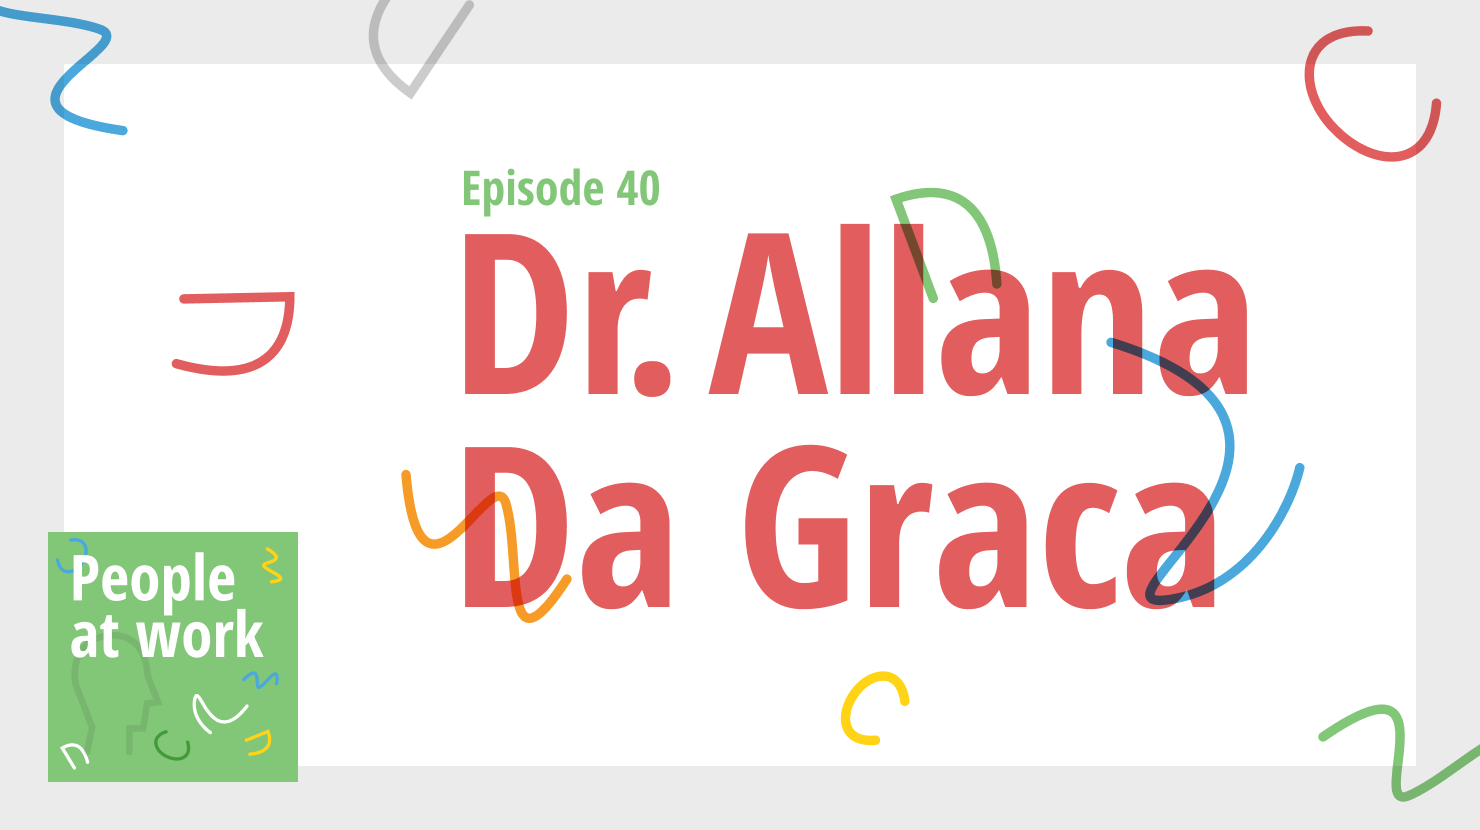 Reboot with laughter, says Dr. Allana Da Graca